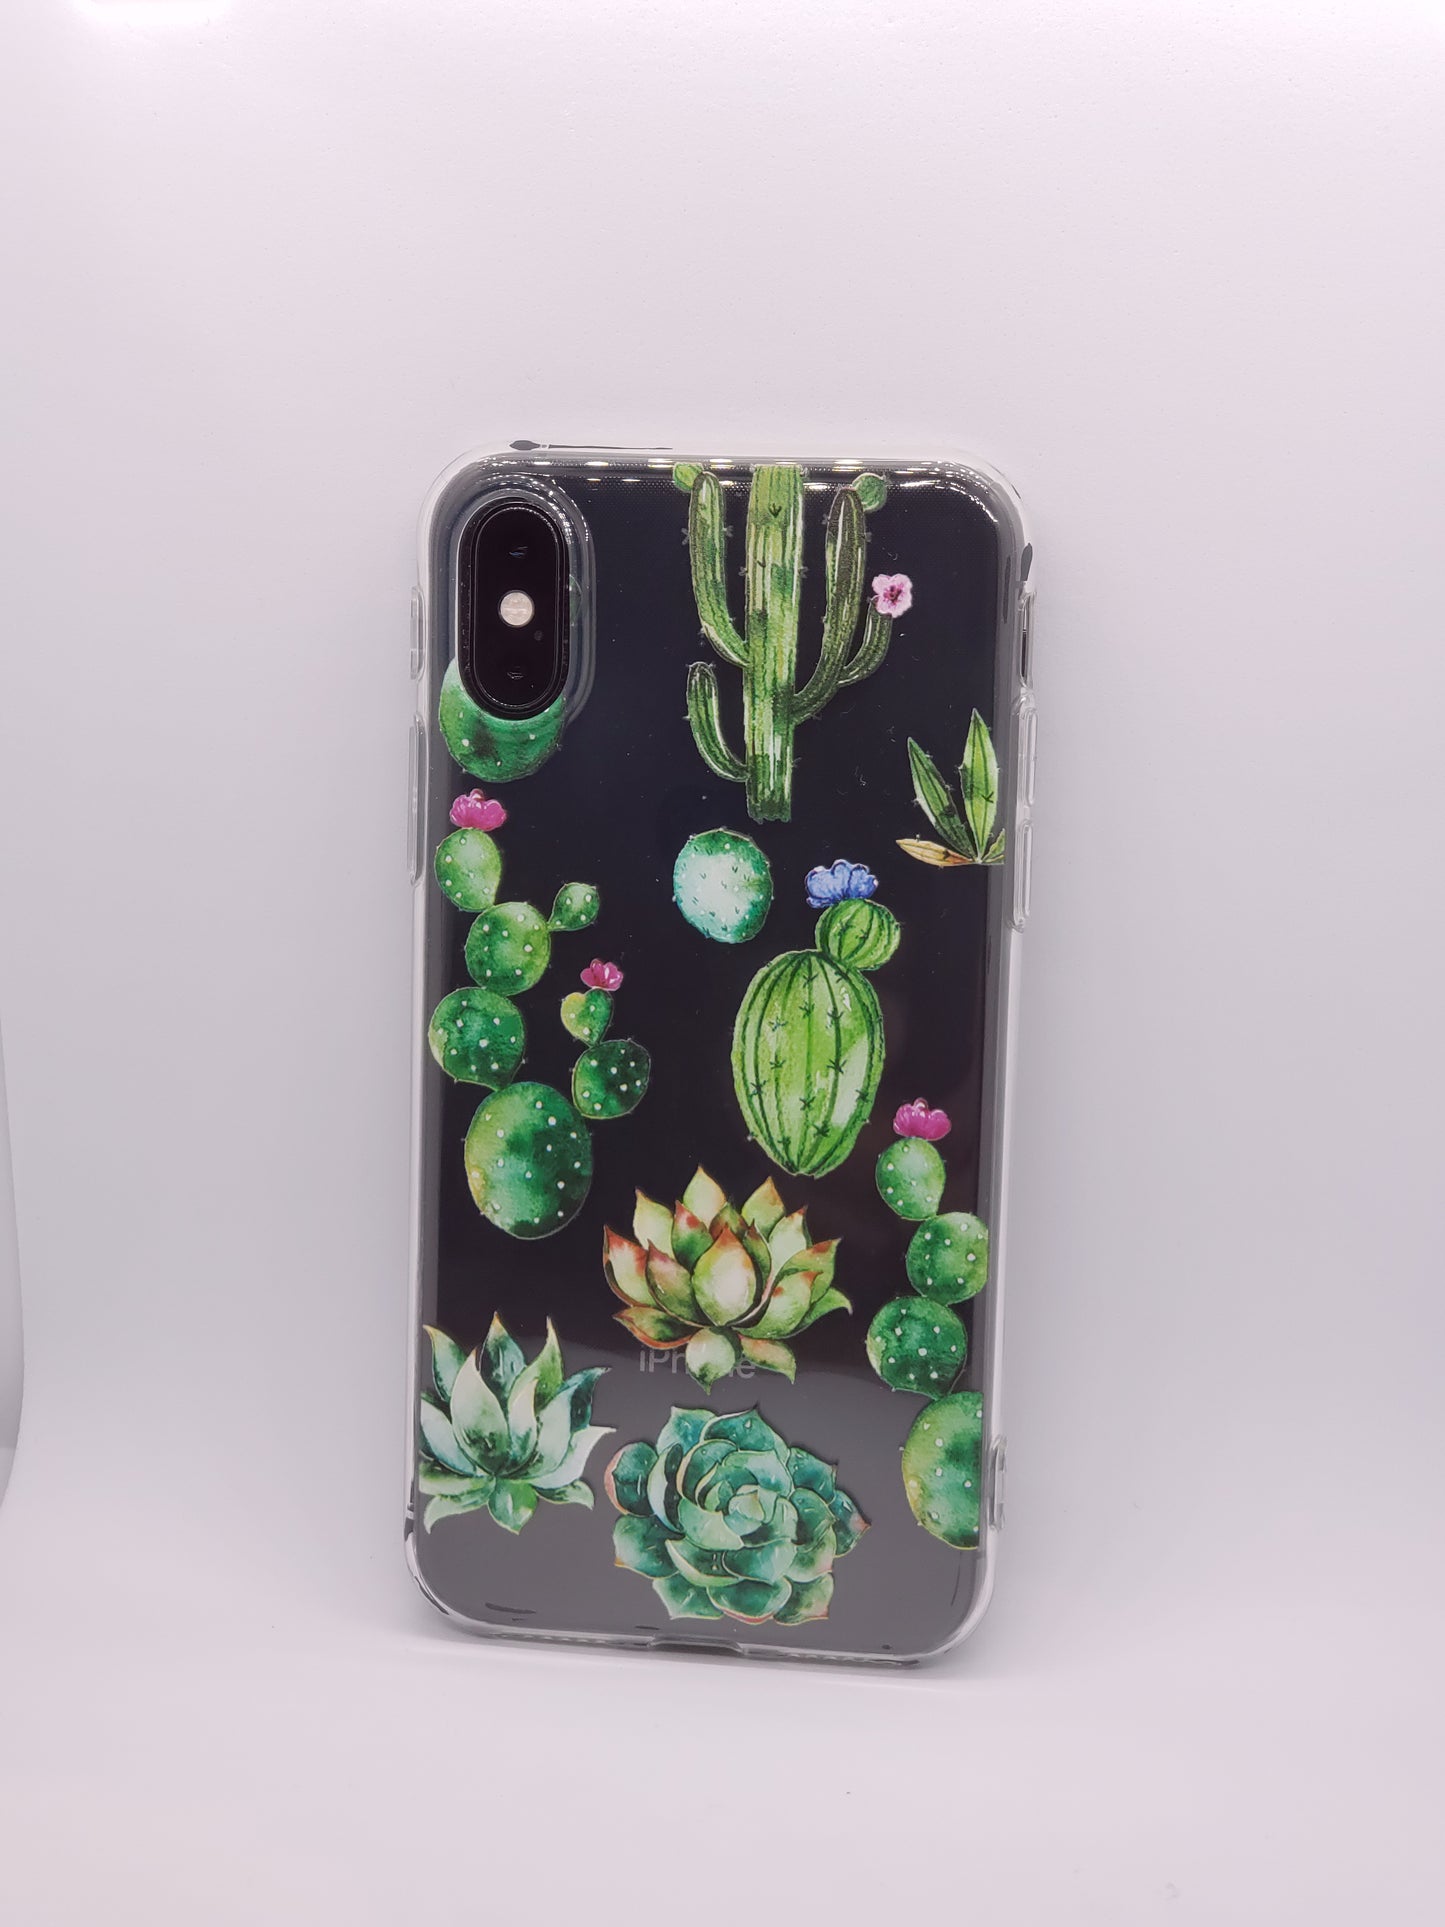 Cactus Flowers Transparent Clear iPhone Case